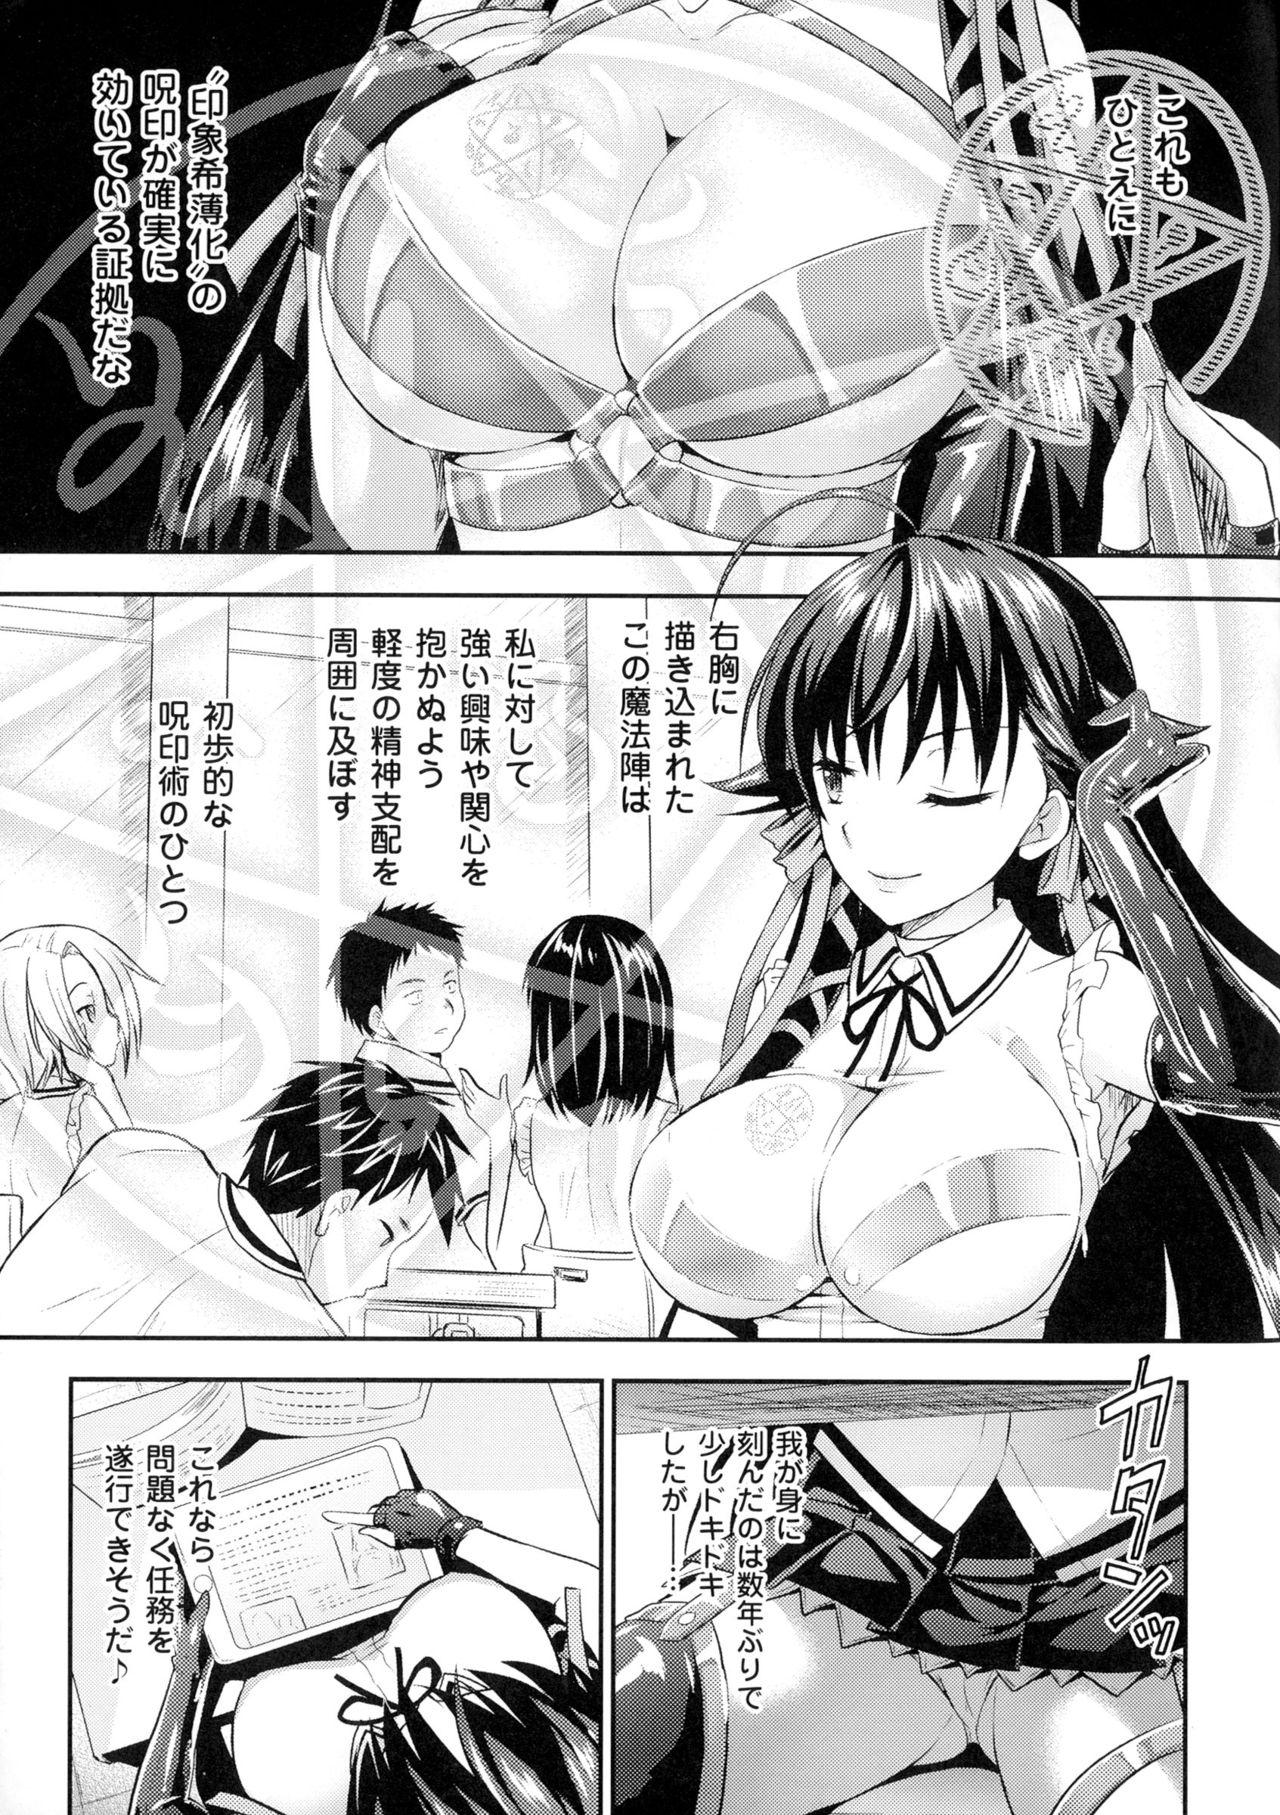 Seigi no Heroine Kangoku File DX Vol. 1 19